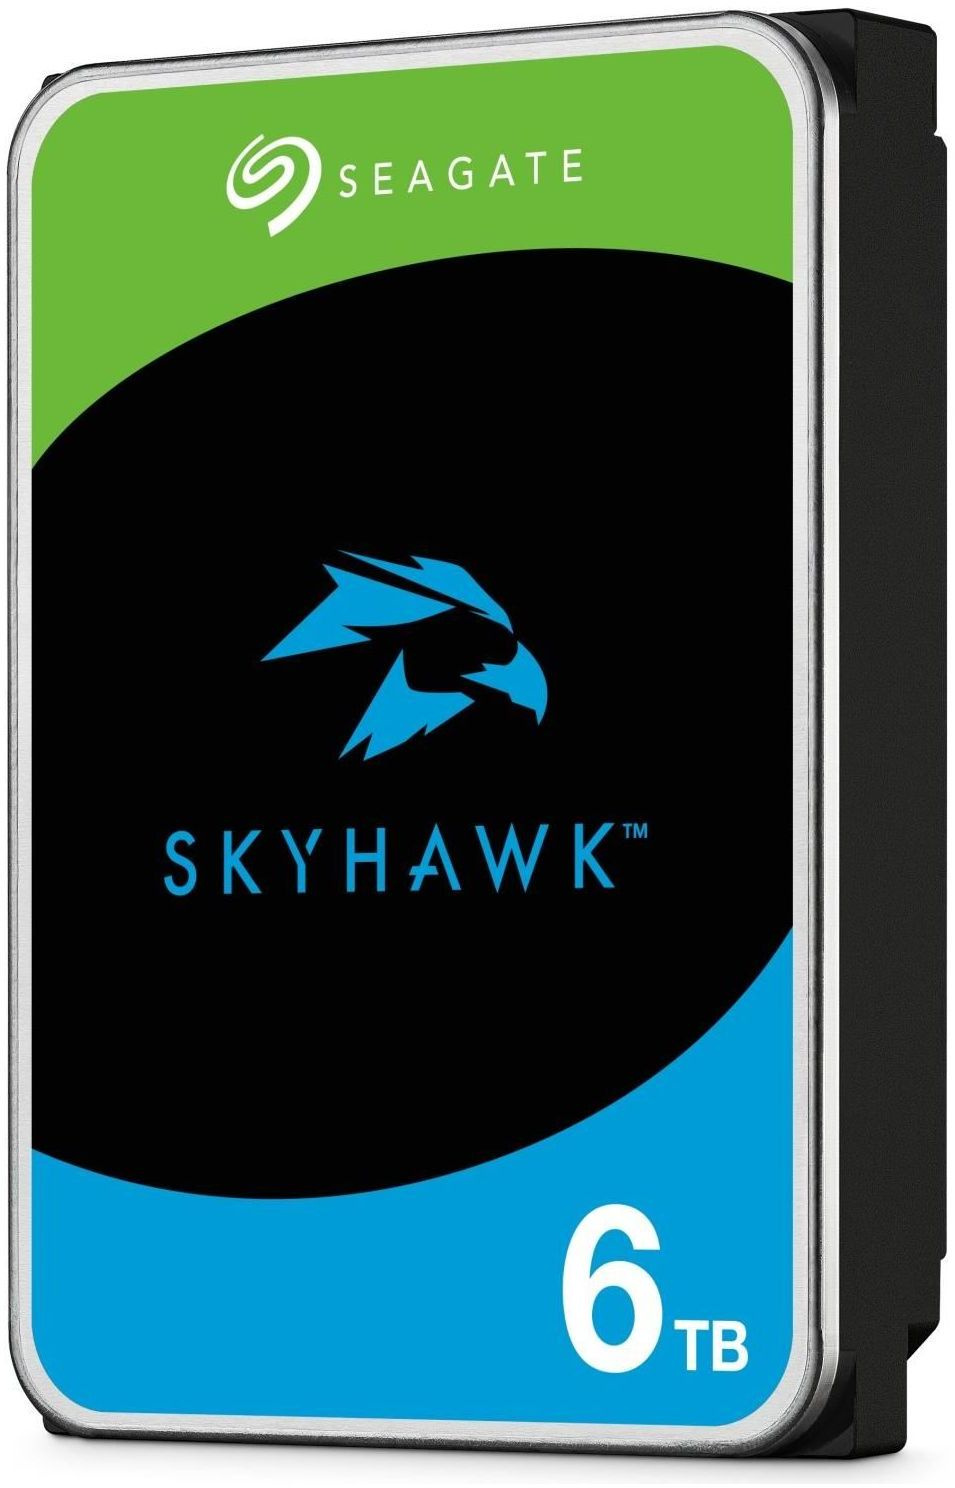   Seagate Skyhawk ST6000VX009,  6,  HDD,  SATA III,  3.5